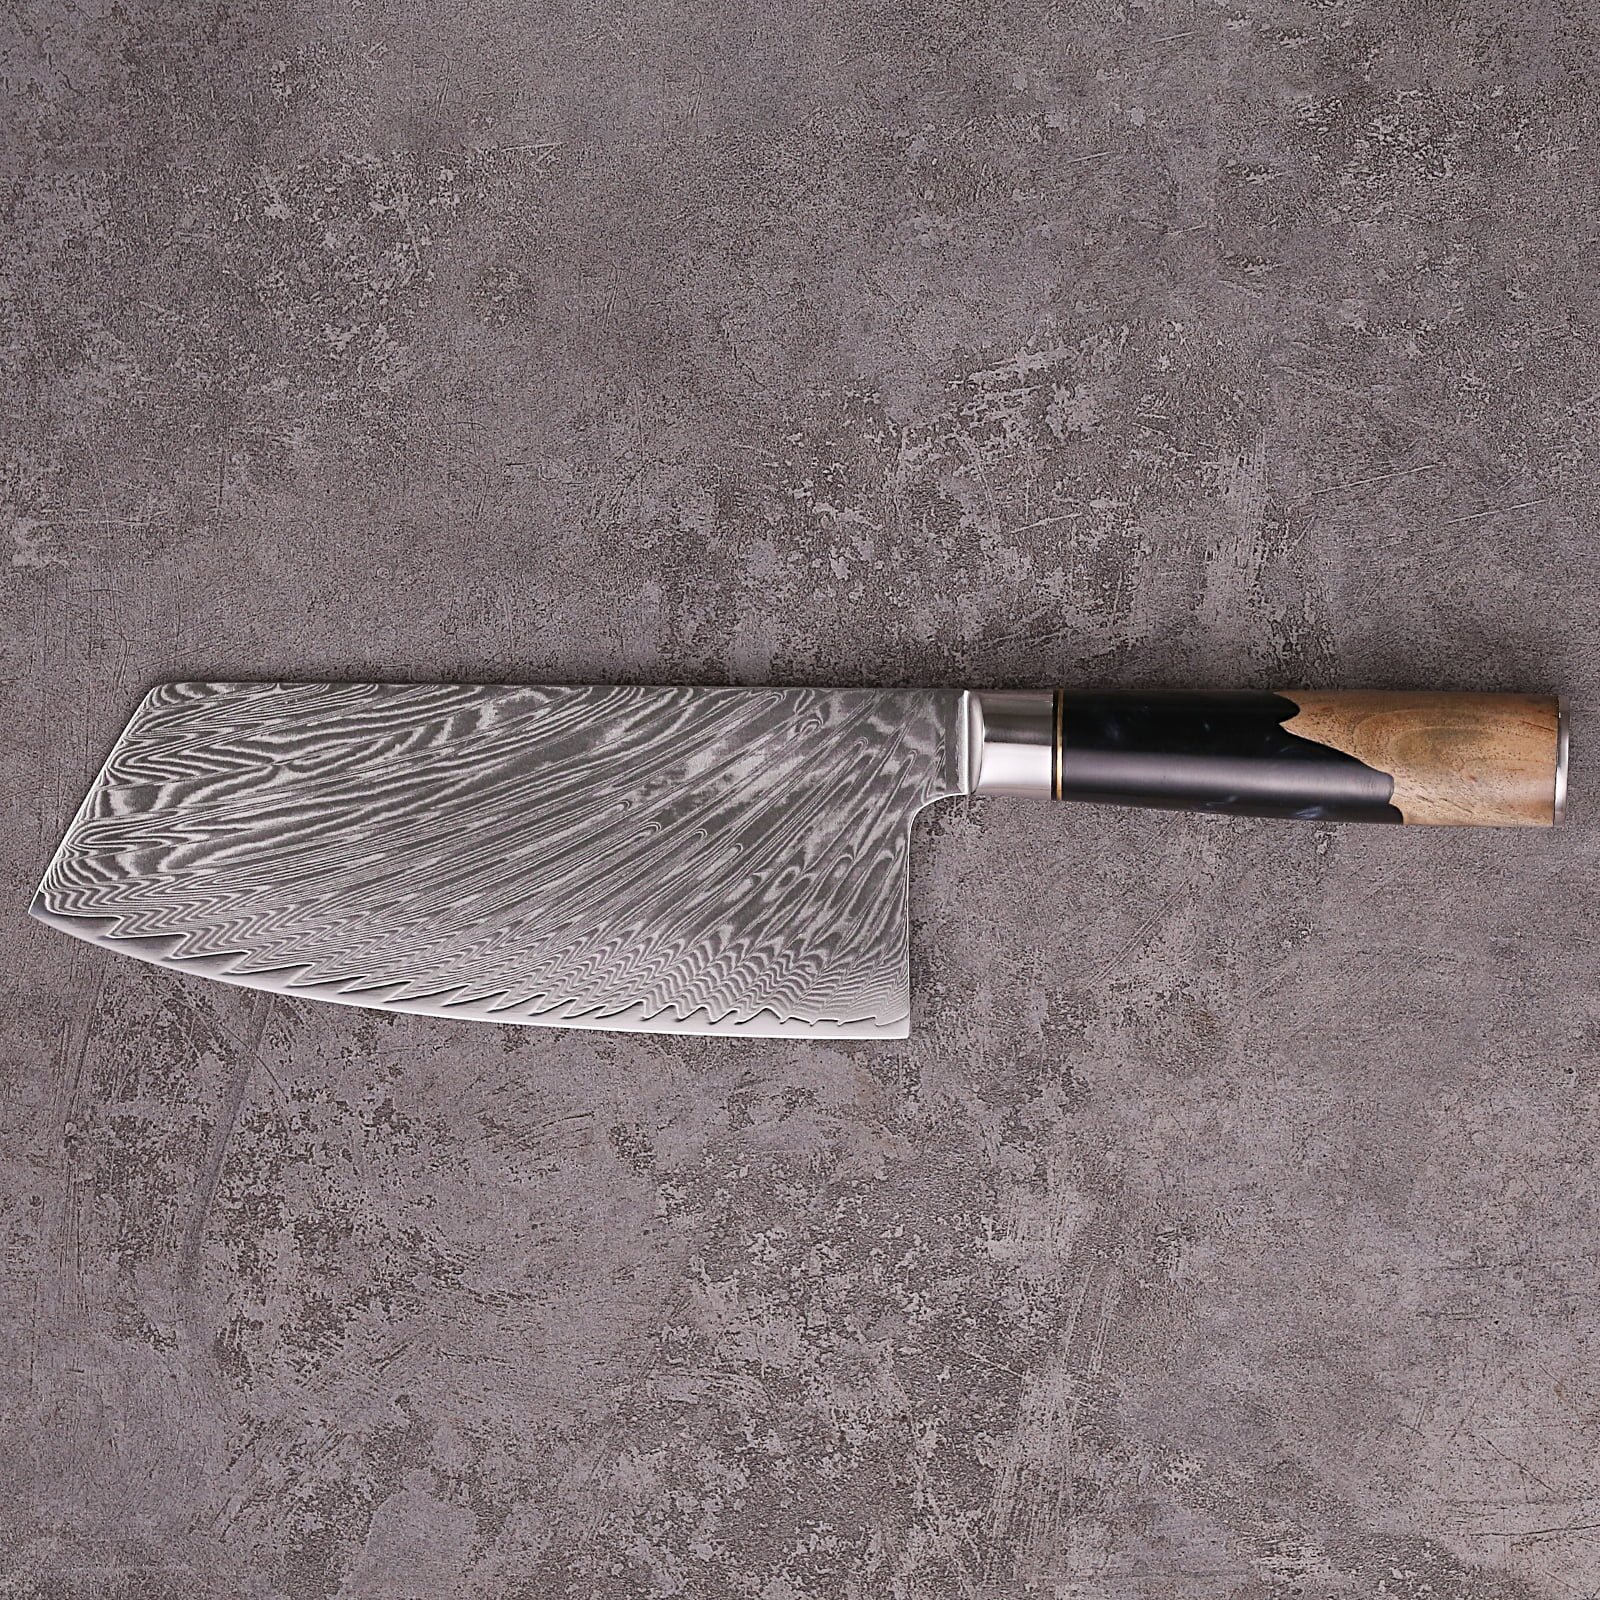 Best Custom Engraved Kitchen Knife